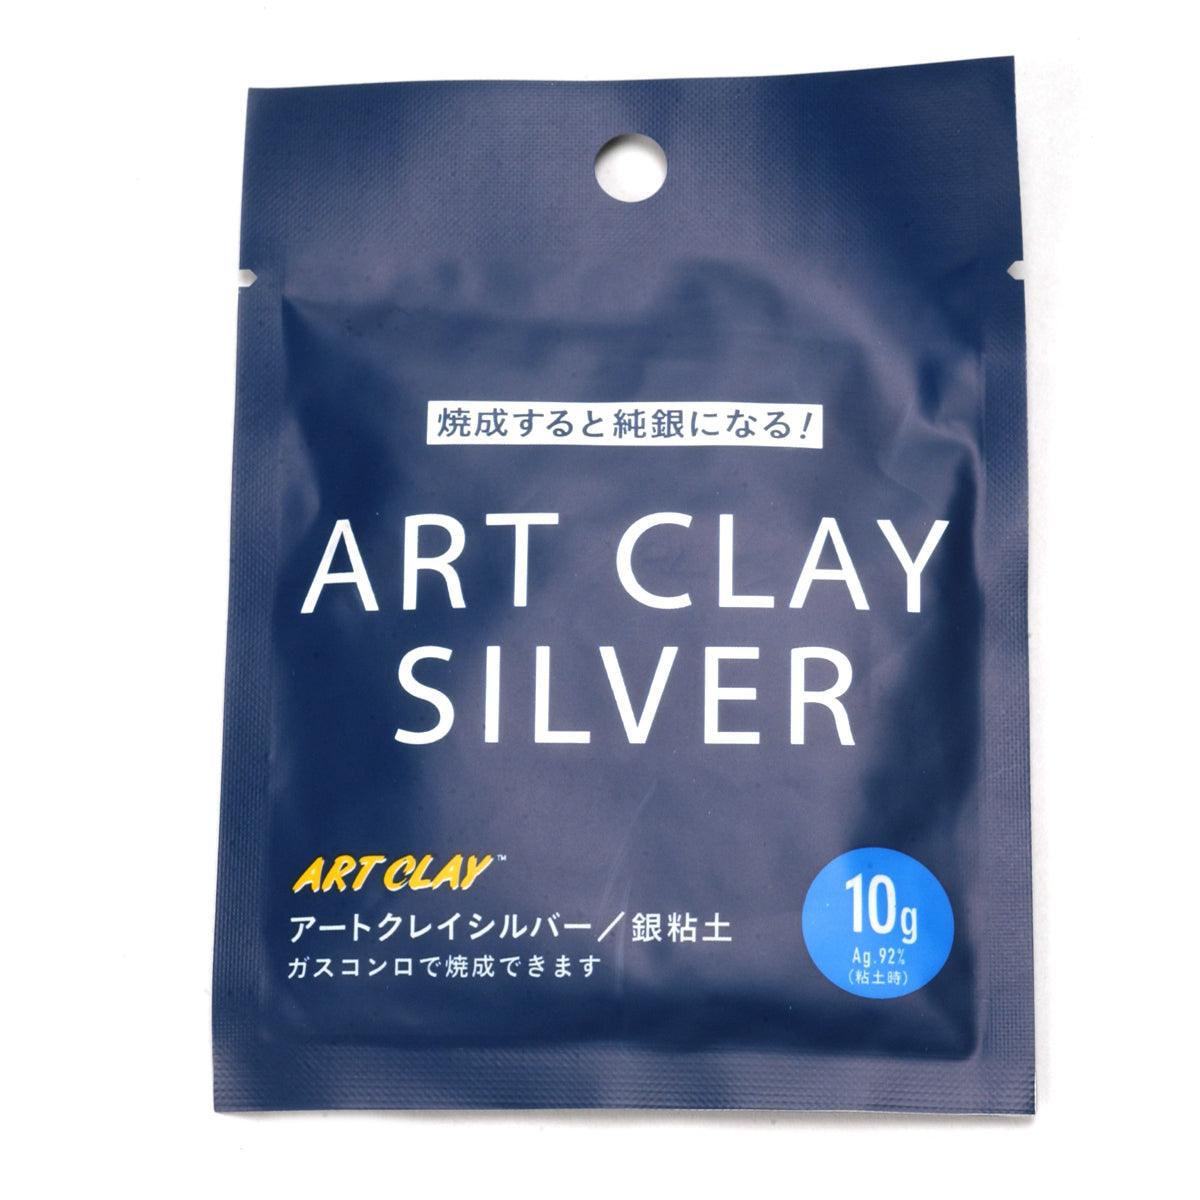 ArtClay Silver 10 gram Package | OttoFrei.com — Otto Frei